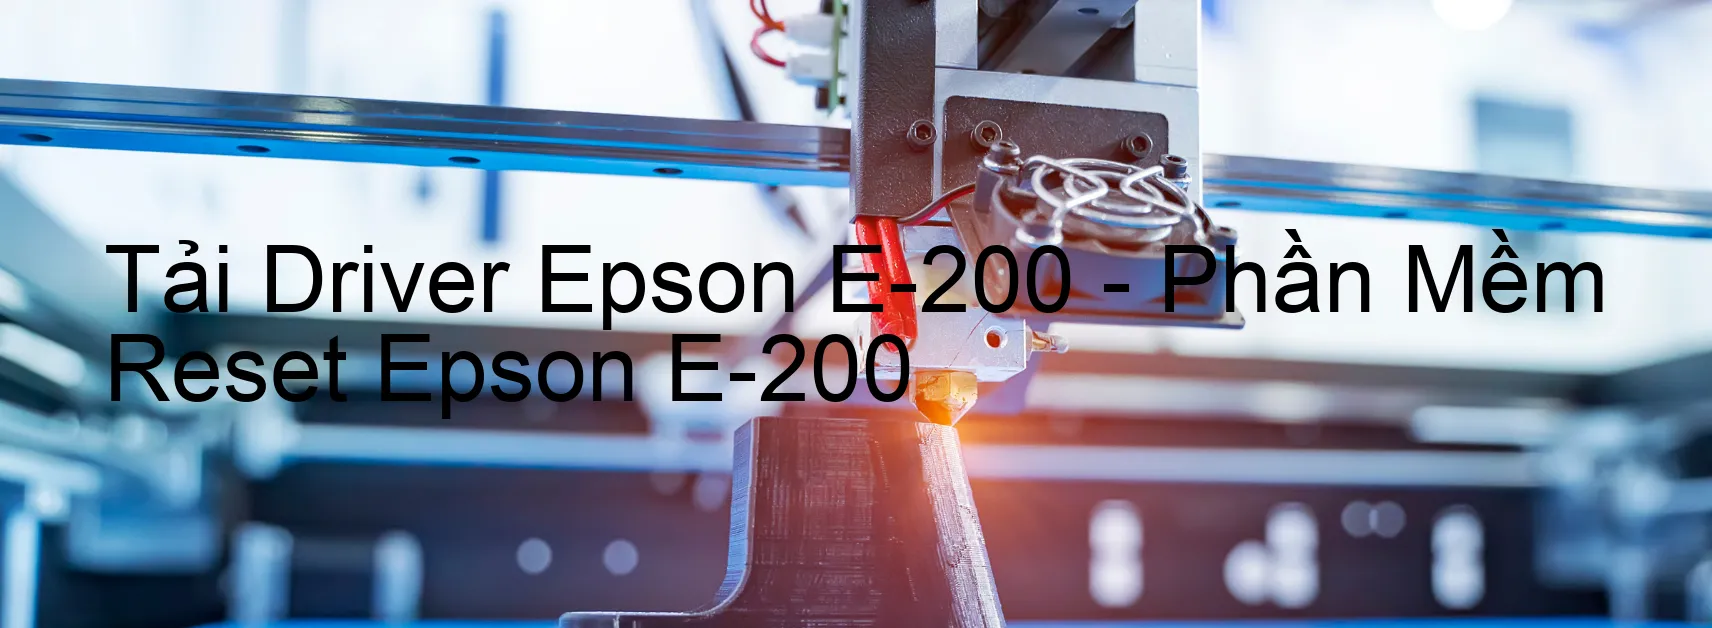 Driver Epson E-200, Phần Mềm Reset Epson E-200